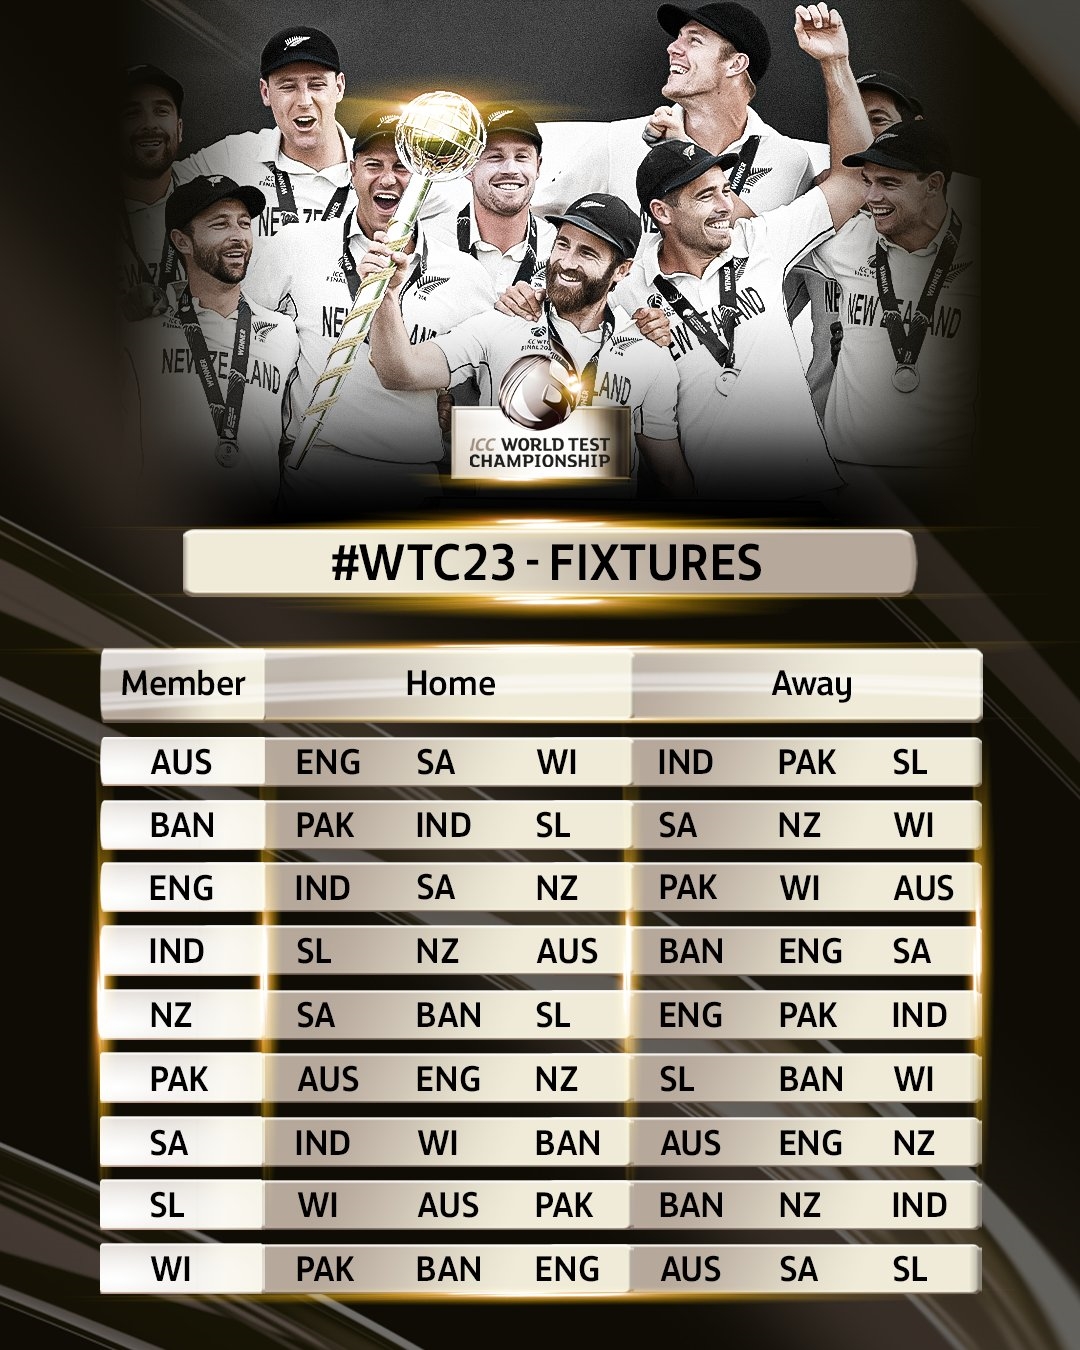 ICC confirms details of next World Test Championship